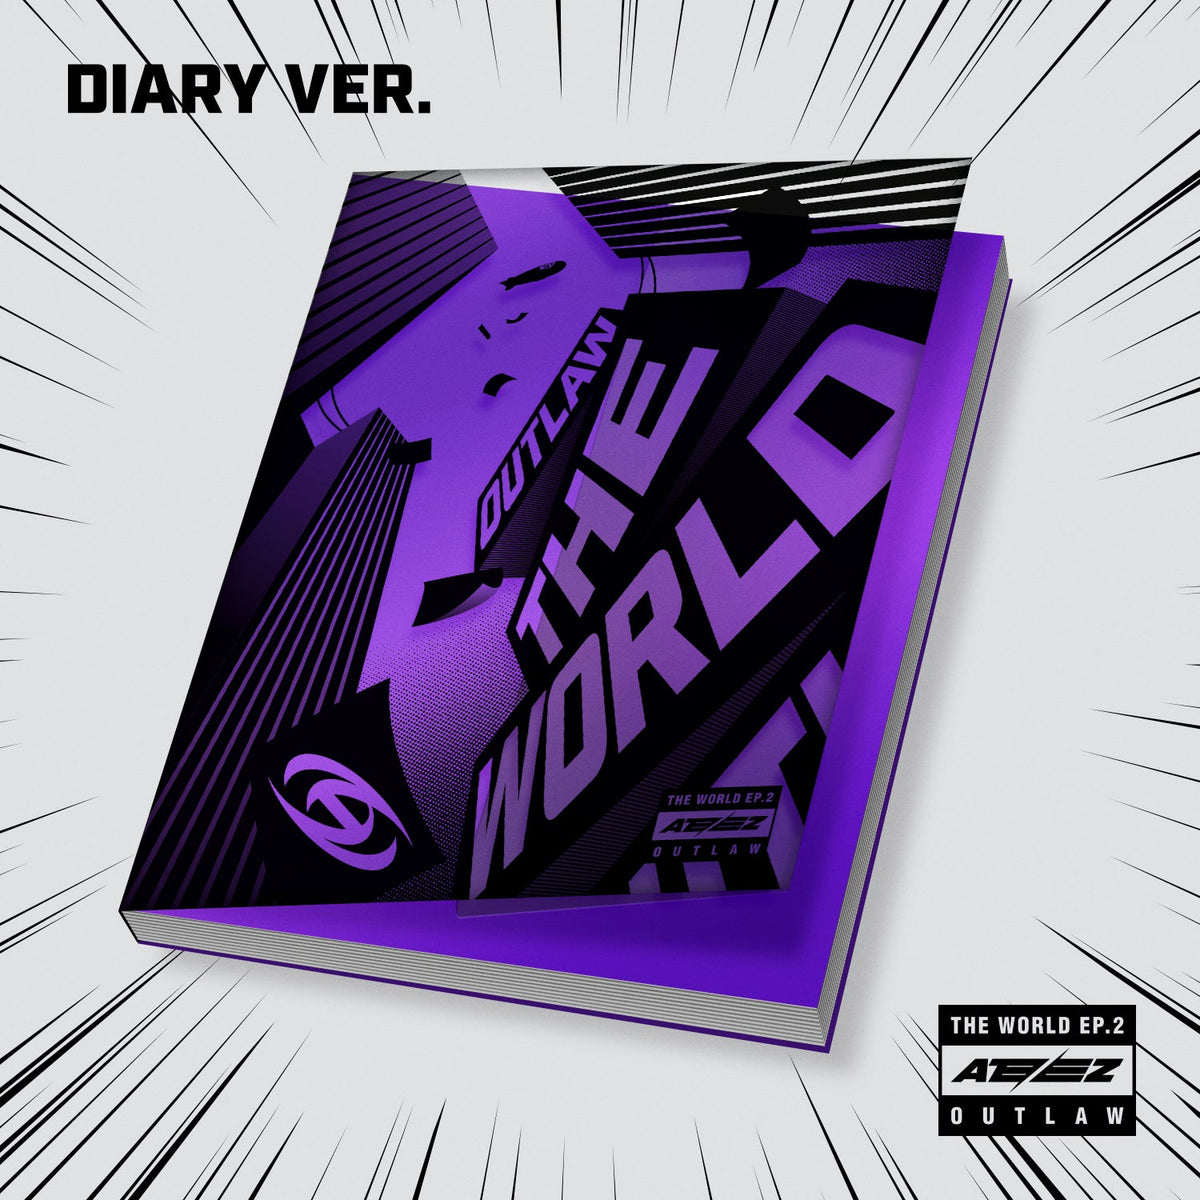 ATEEZ THE WORLD EP 2 OUTLAW 9th EP Album - Diary version main image